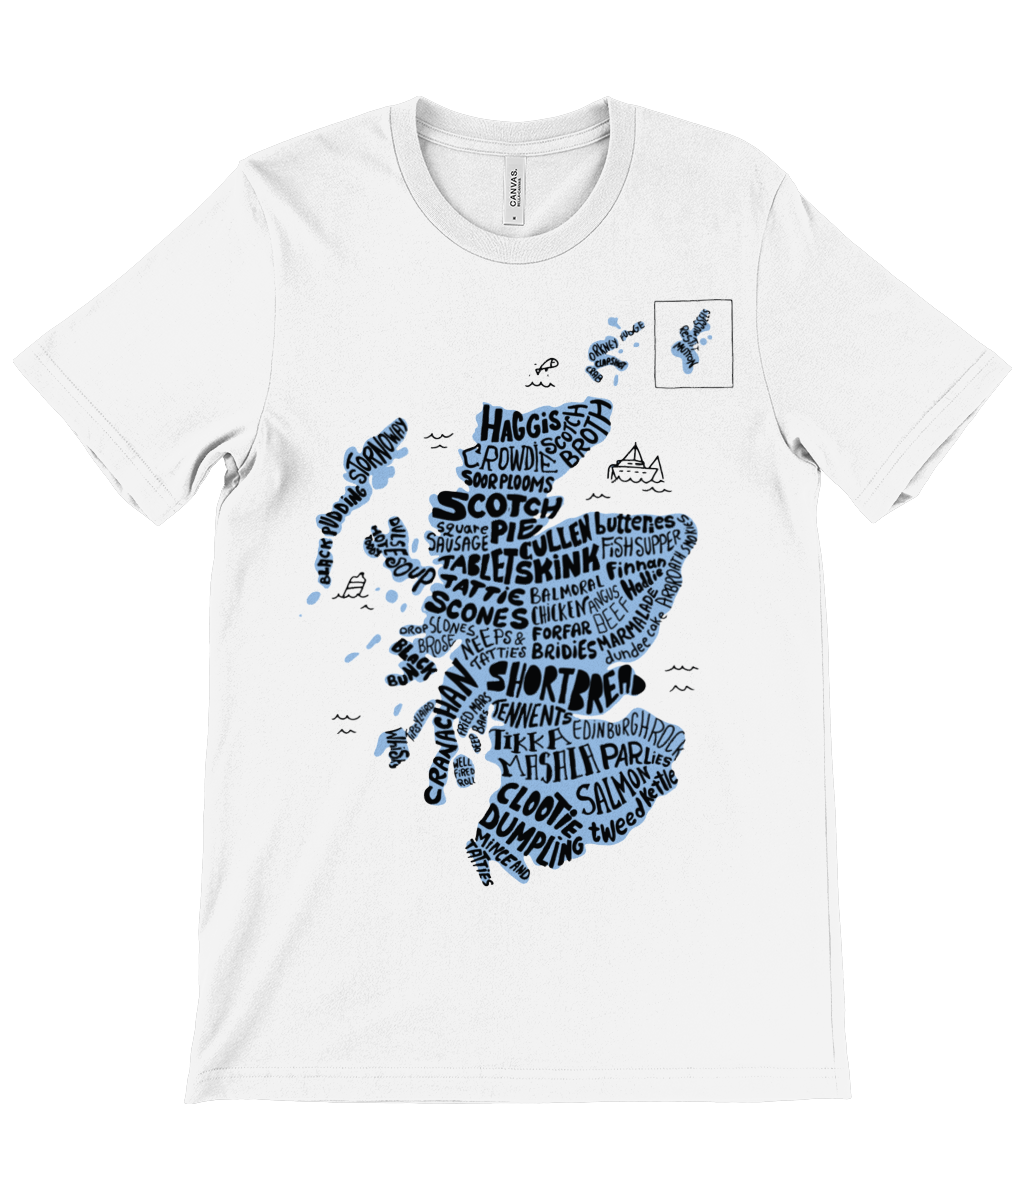 Foods of Scotland Map T-Shirt - Blue